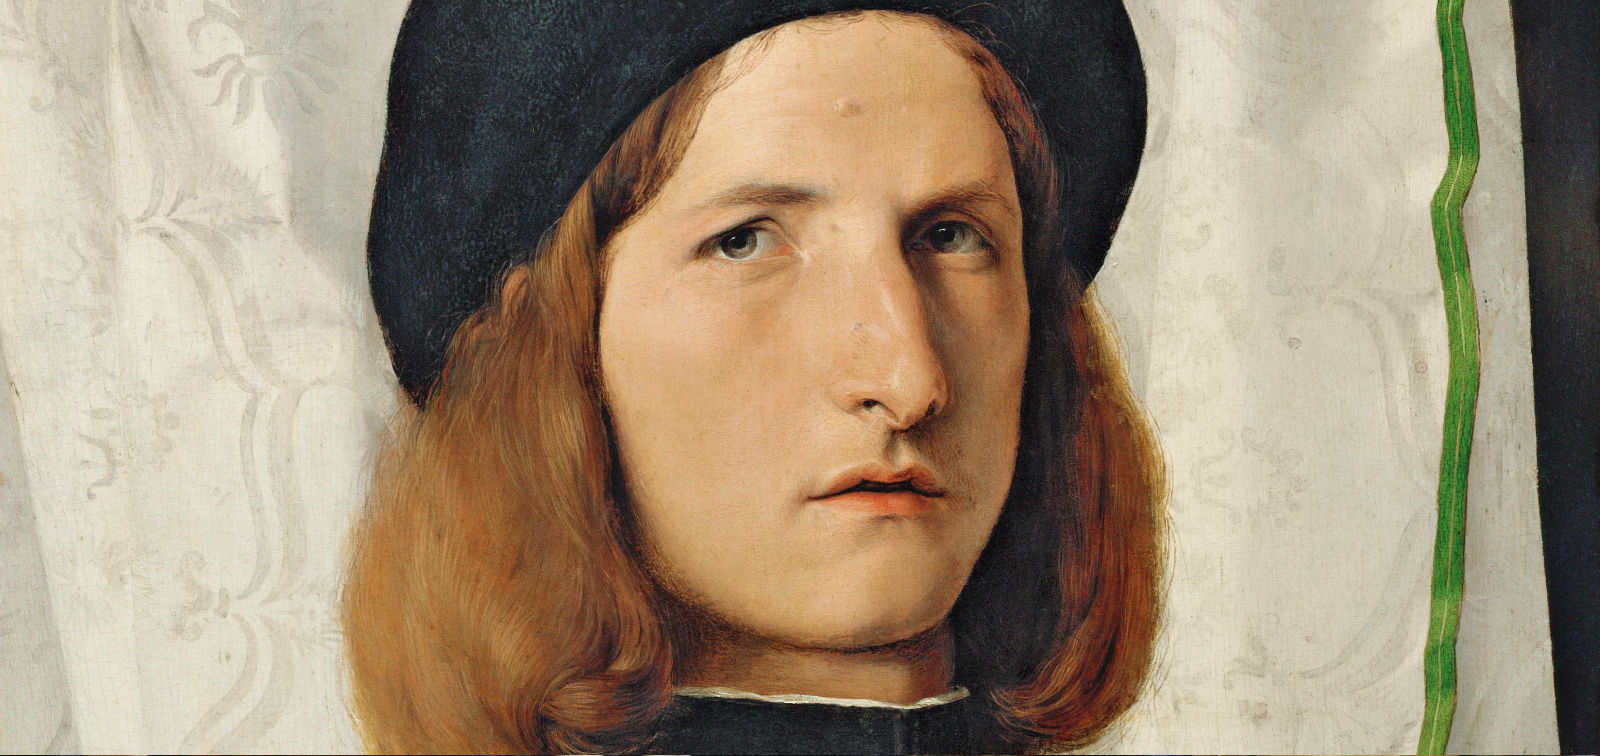 Lorenzo Lotto. Portraits